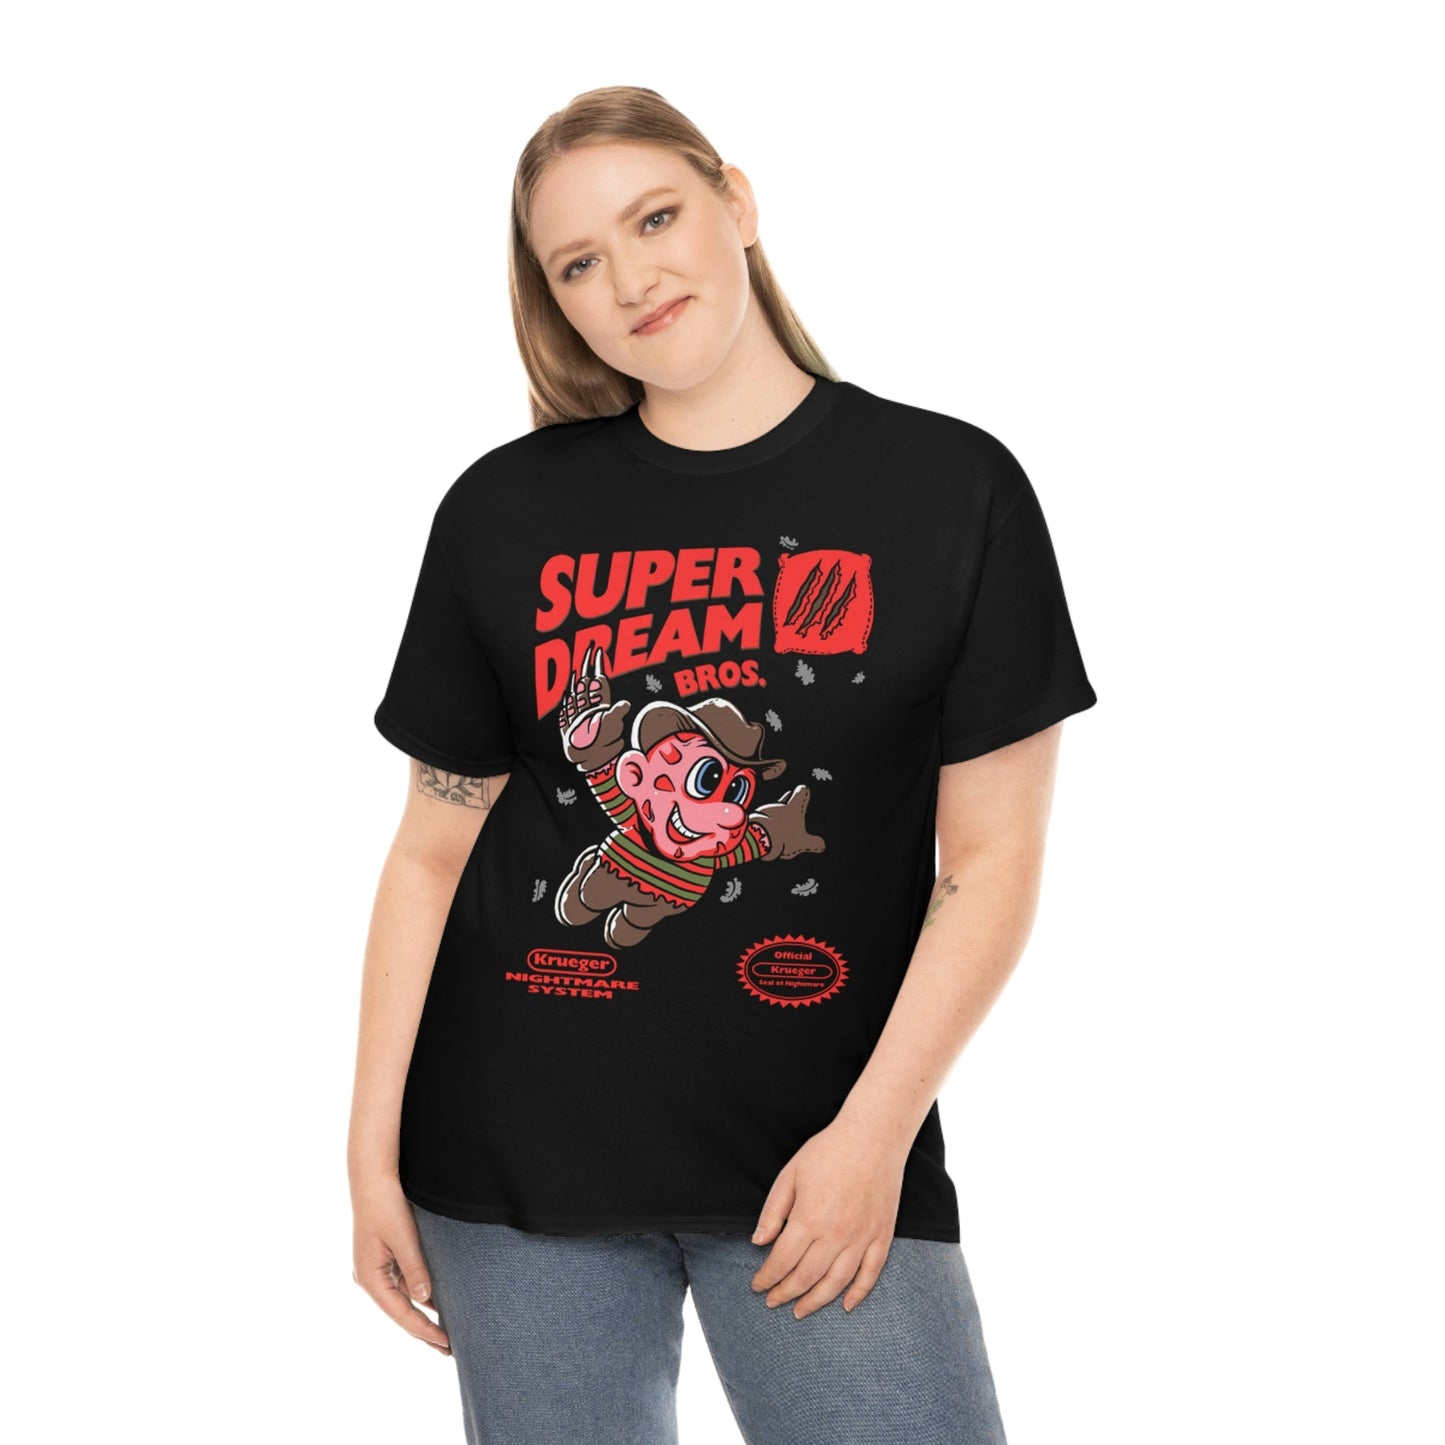 Super Dream Bros. Freddy Krueger T-Shirt - RetroTeeShop